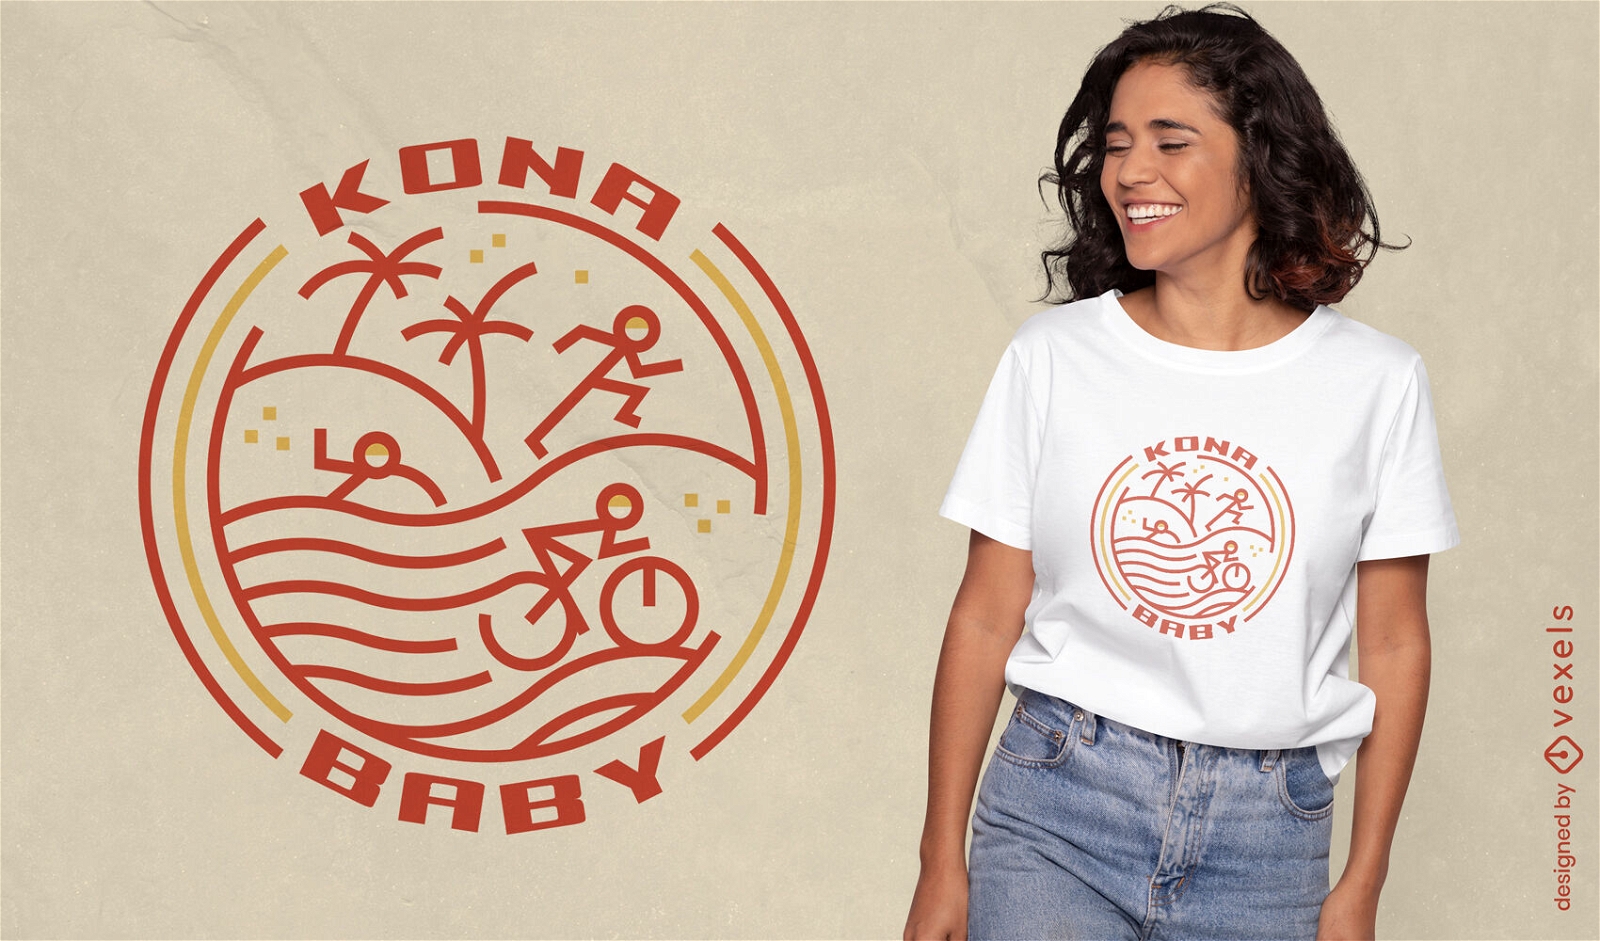 Hawaii triathlon stroke t-shirt design